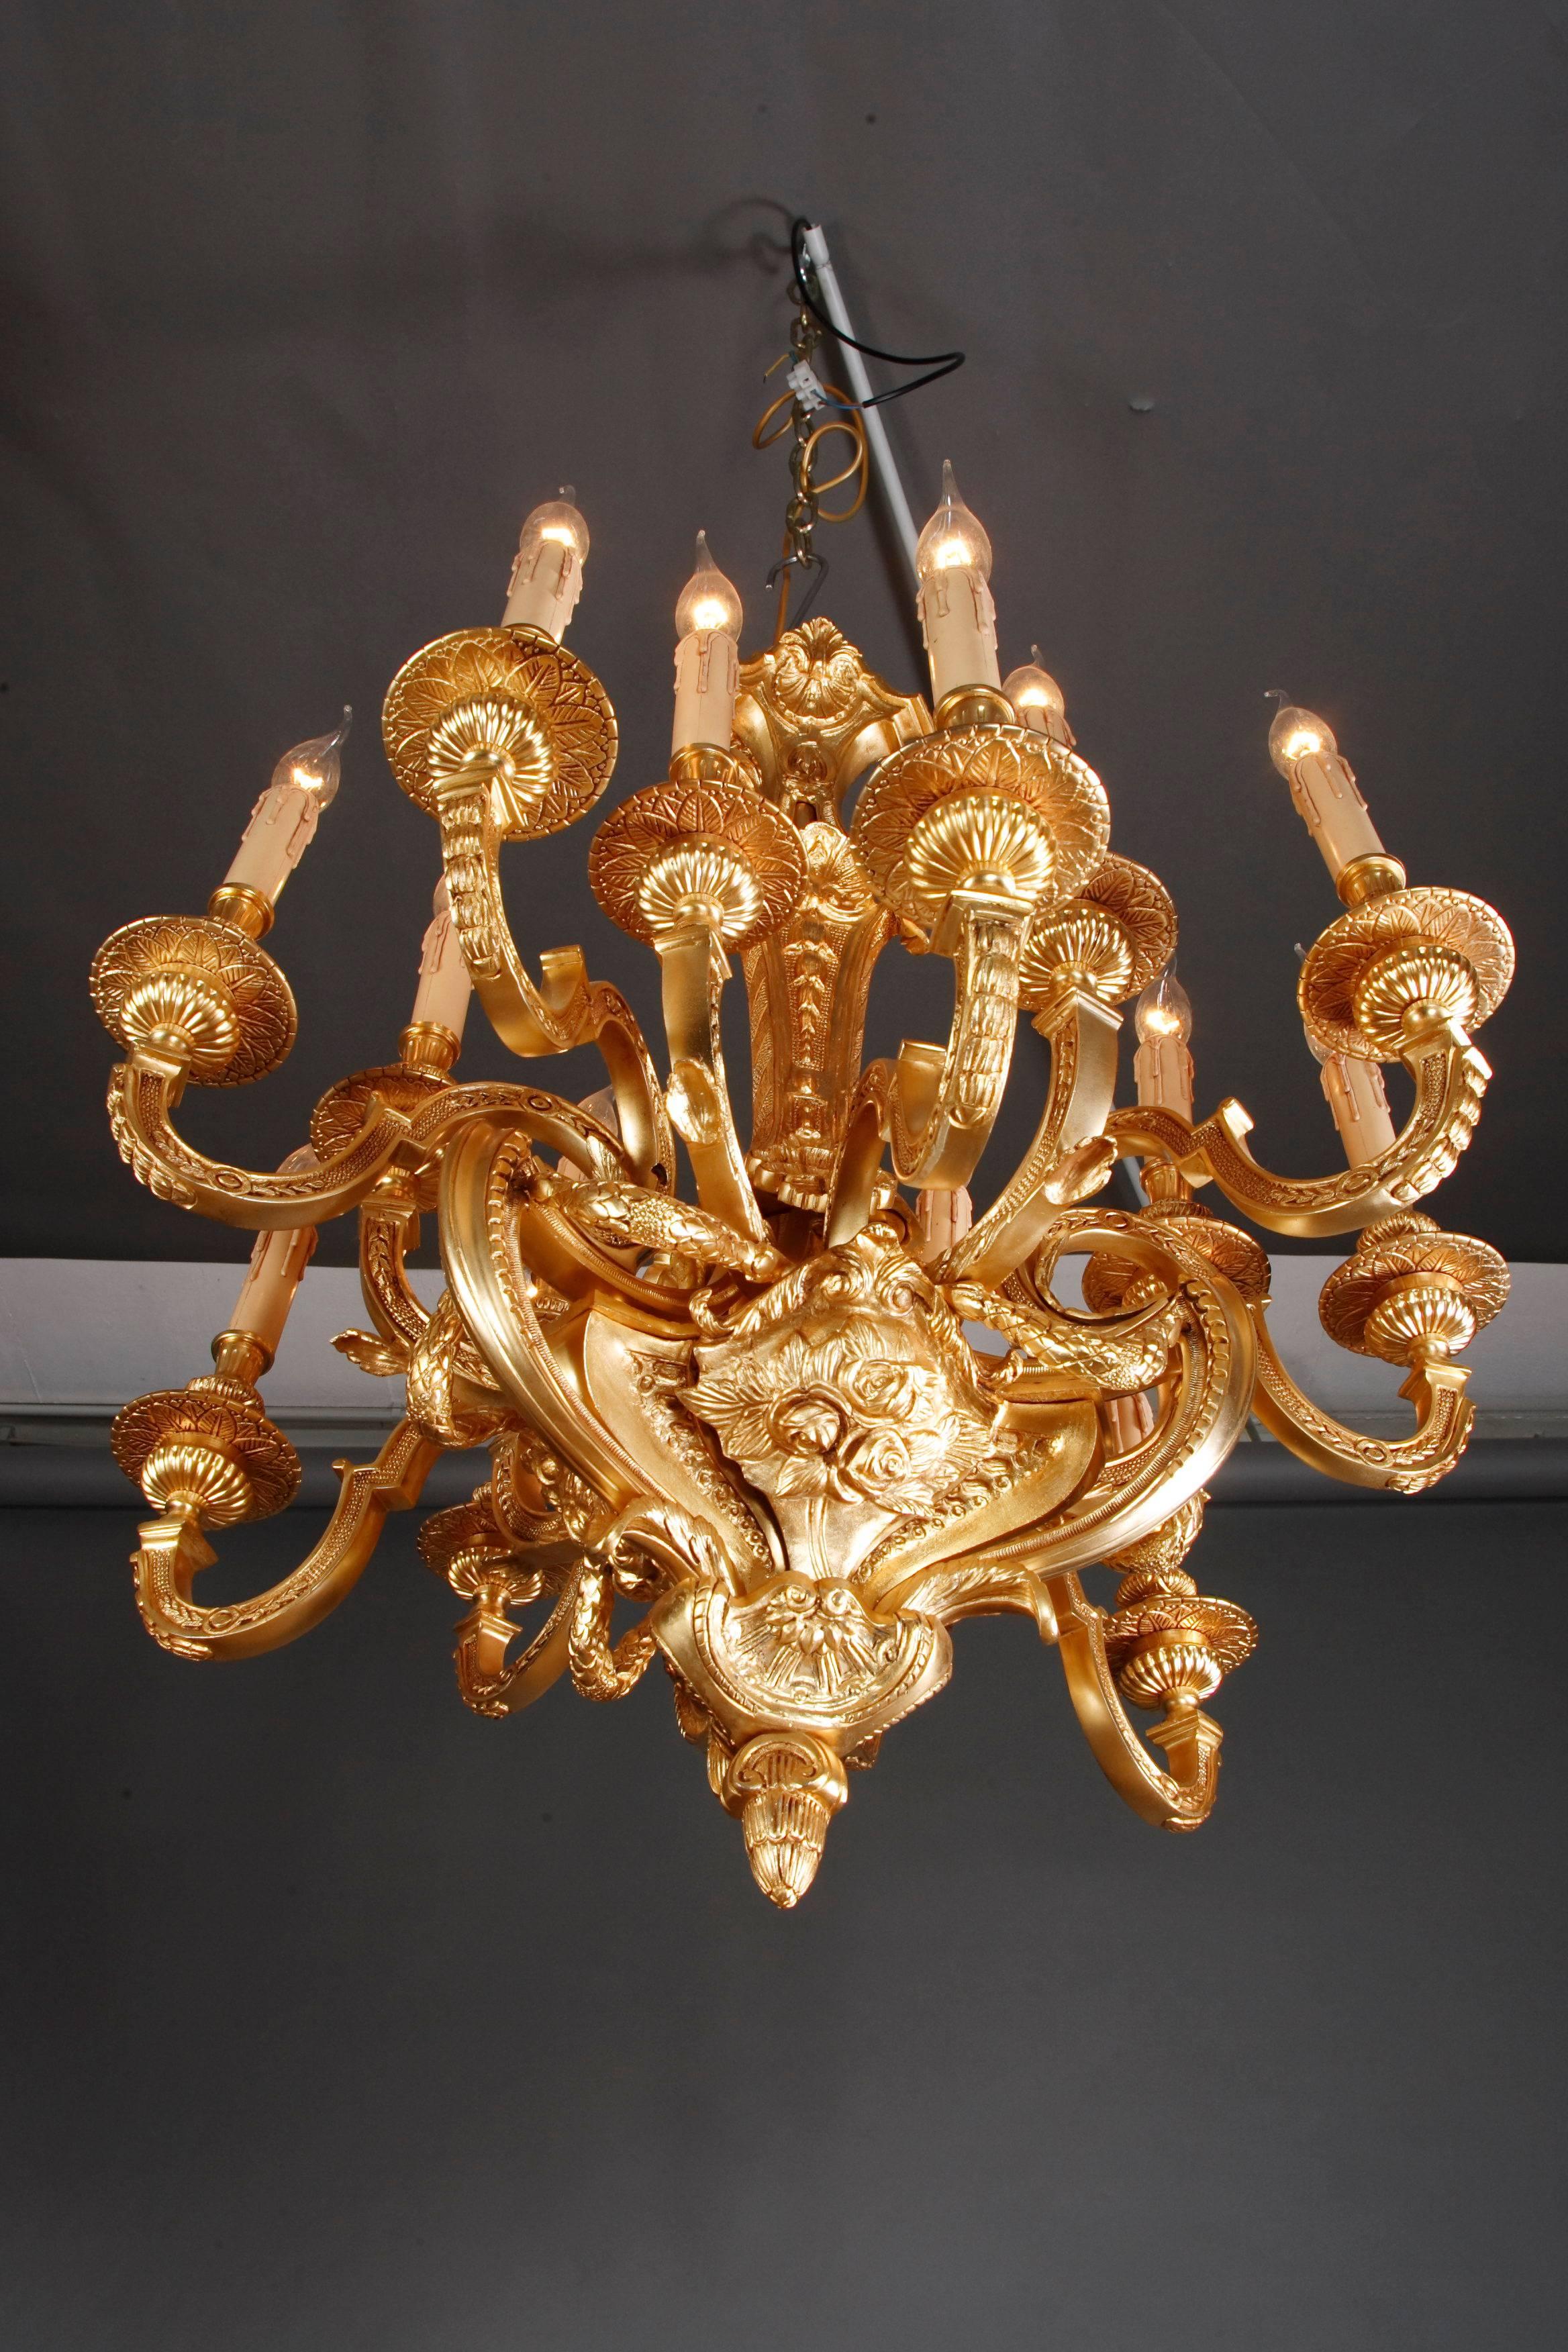 Brass Ceiling Candelabra in Louis XIV Style